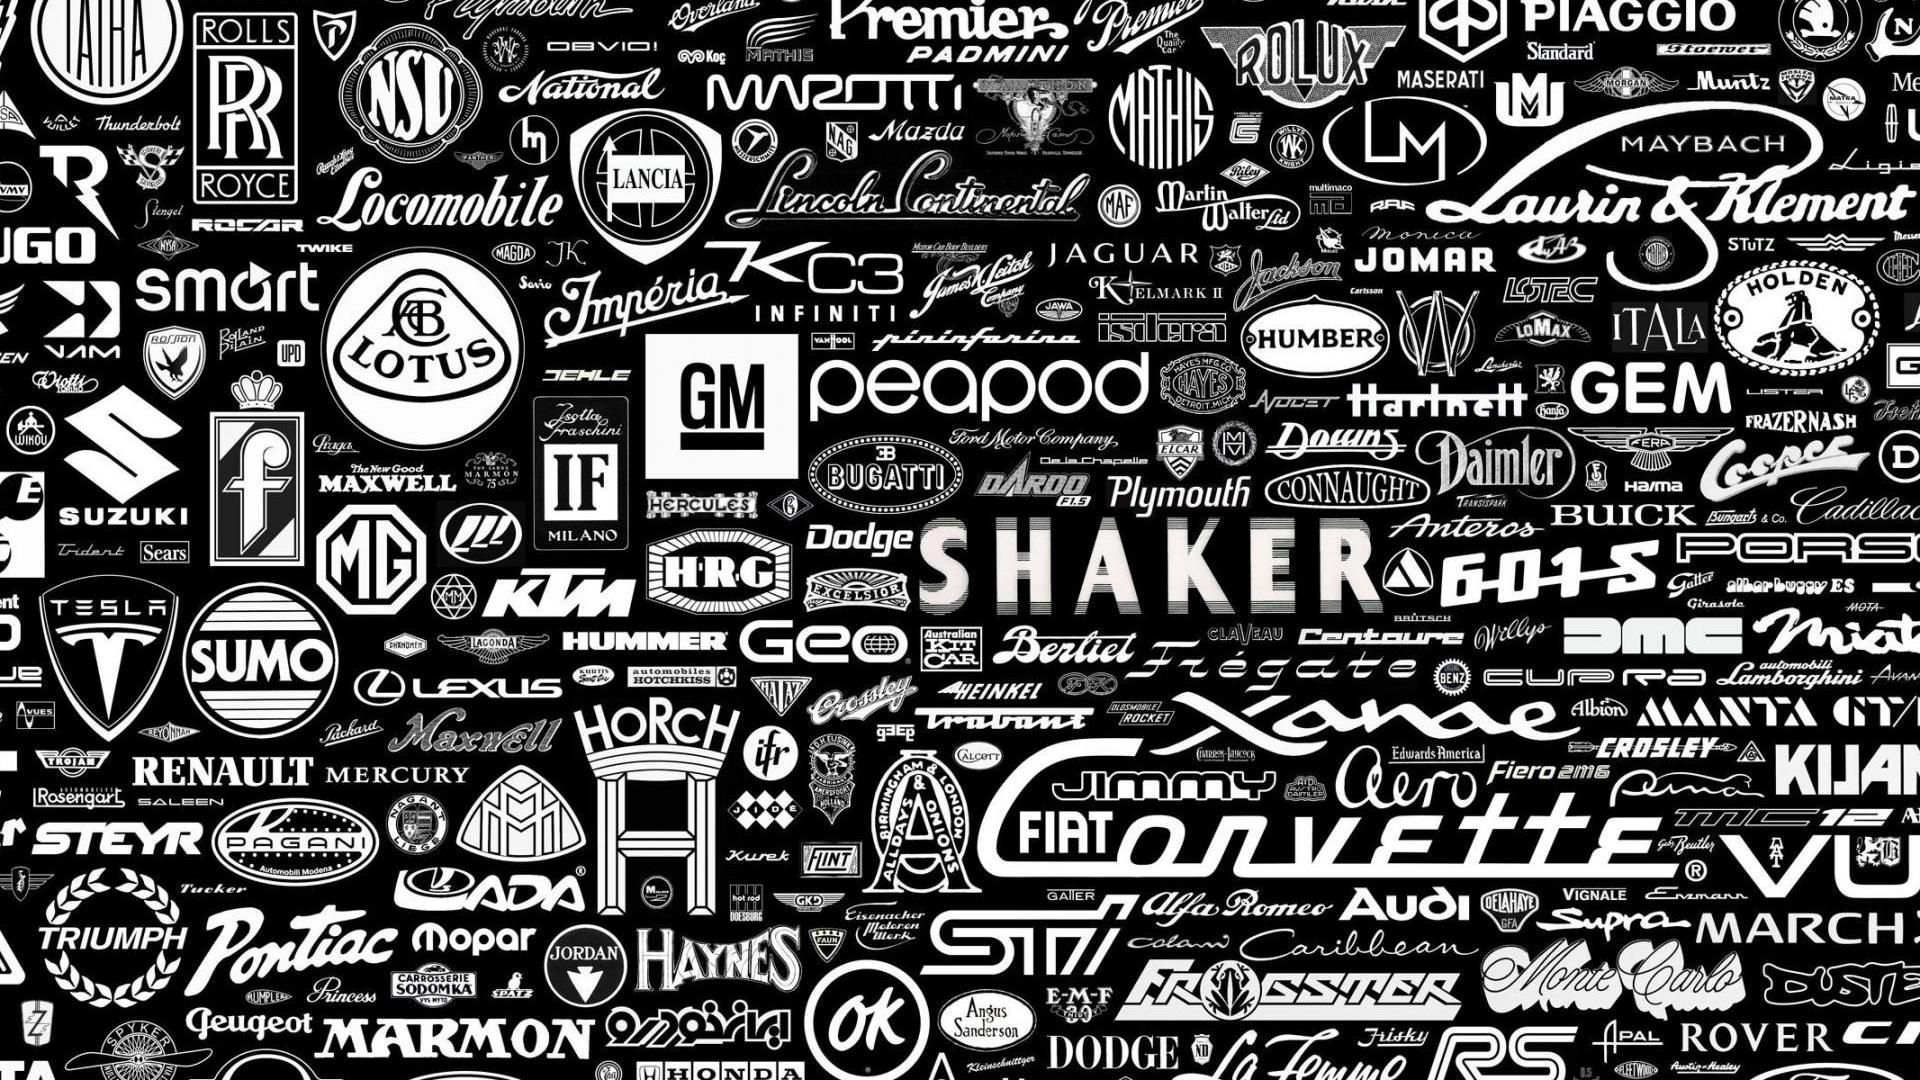 Hd Wallpapers For Car Logos